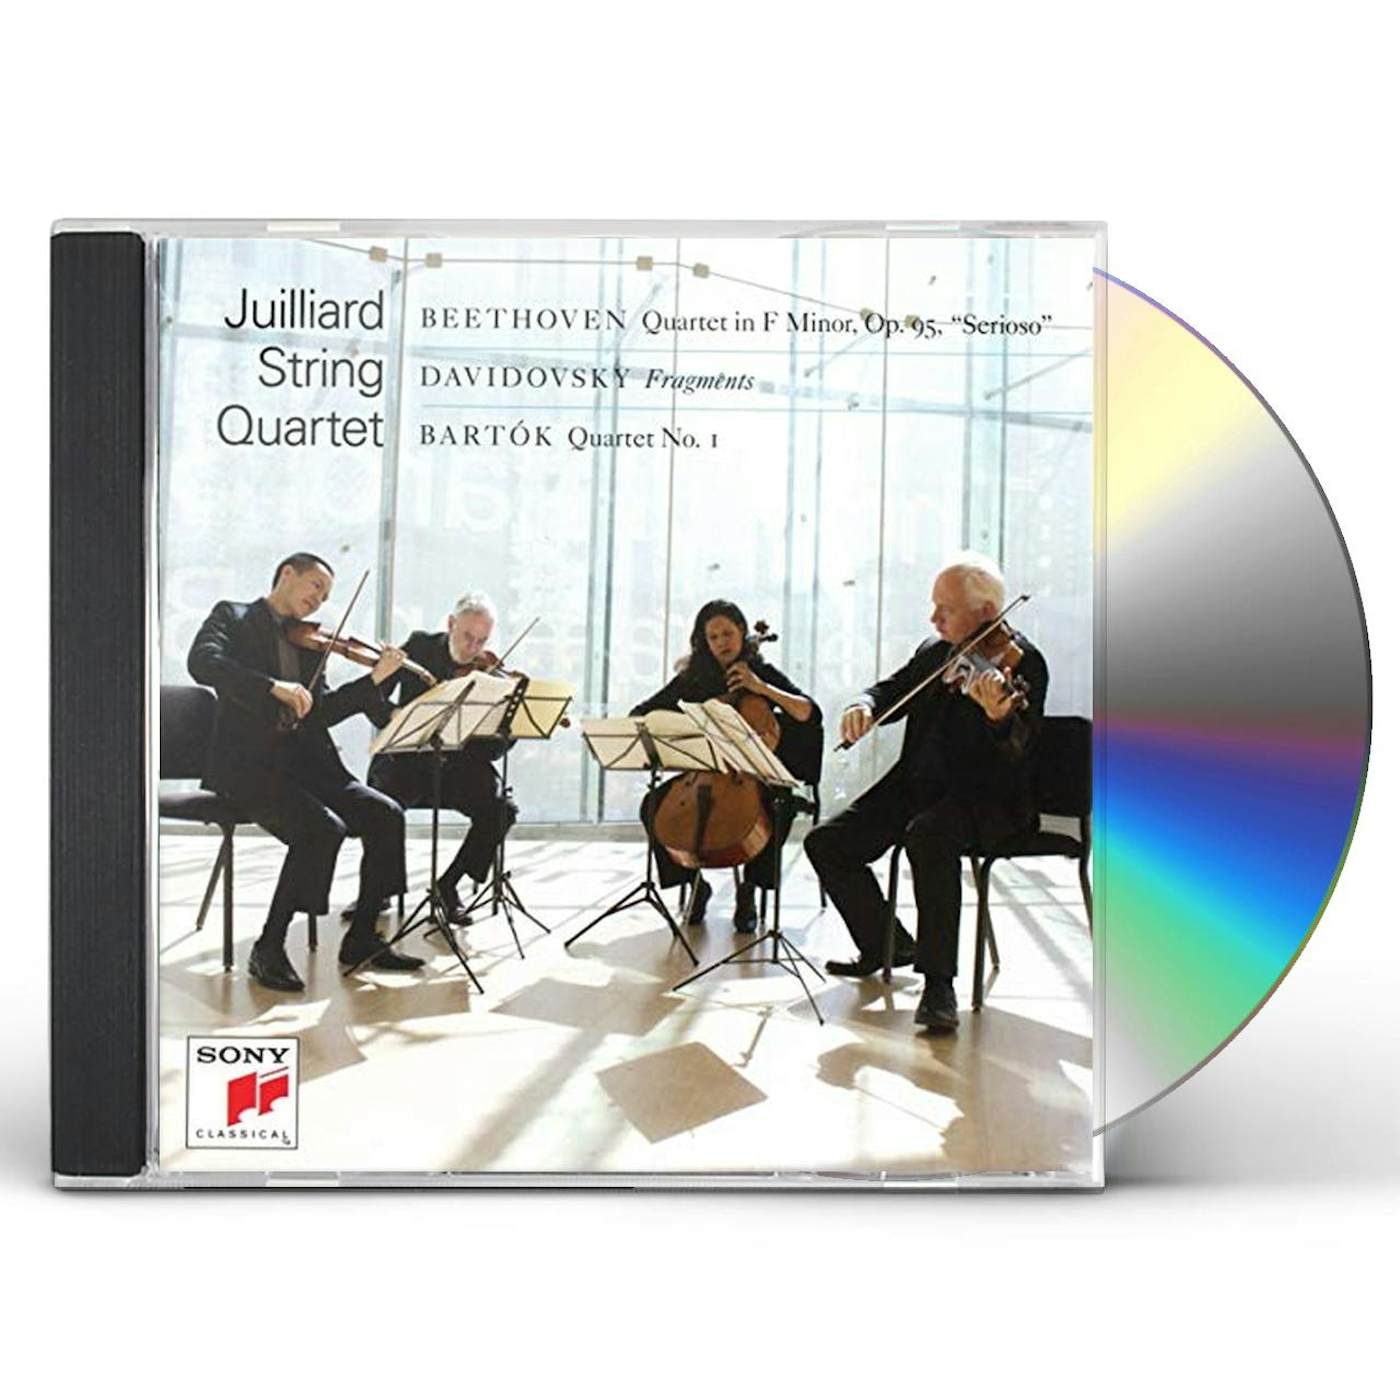 Juilliard String Quartet BEETHOVEN / DAVIDOVSKY / BARTOK CD